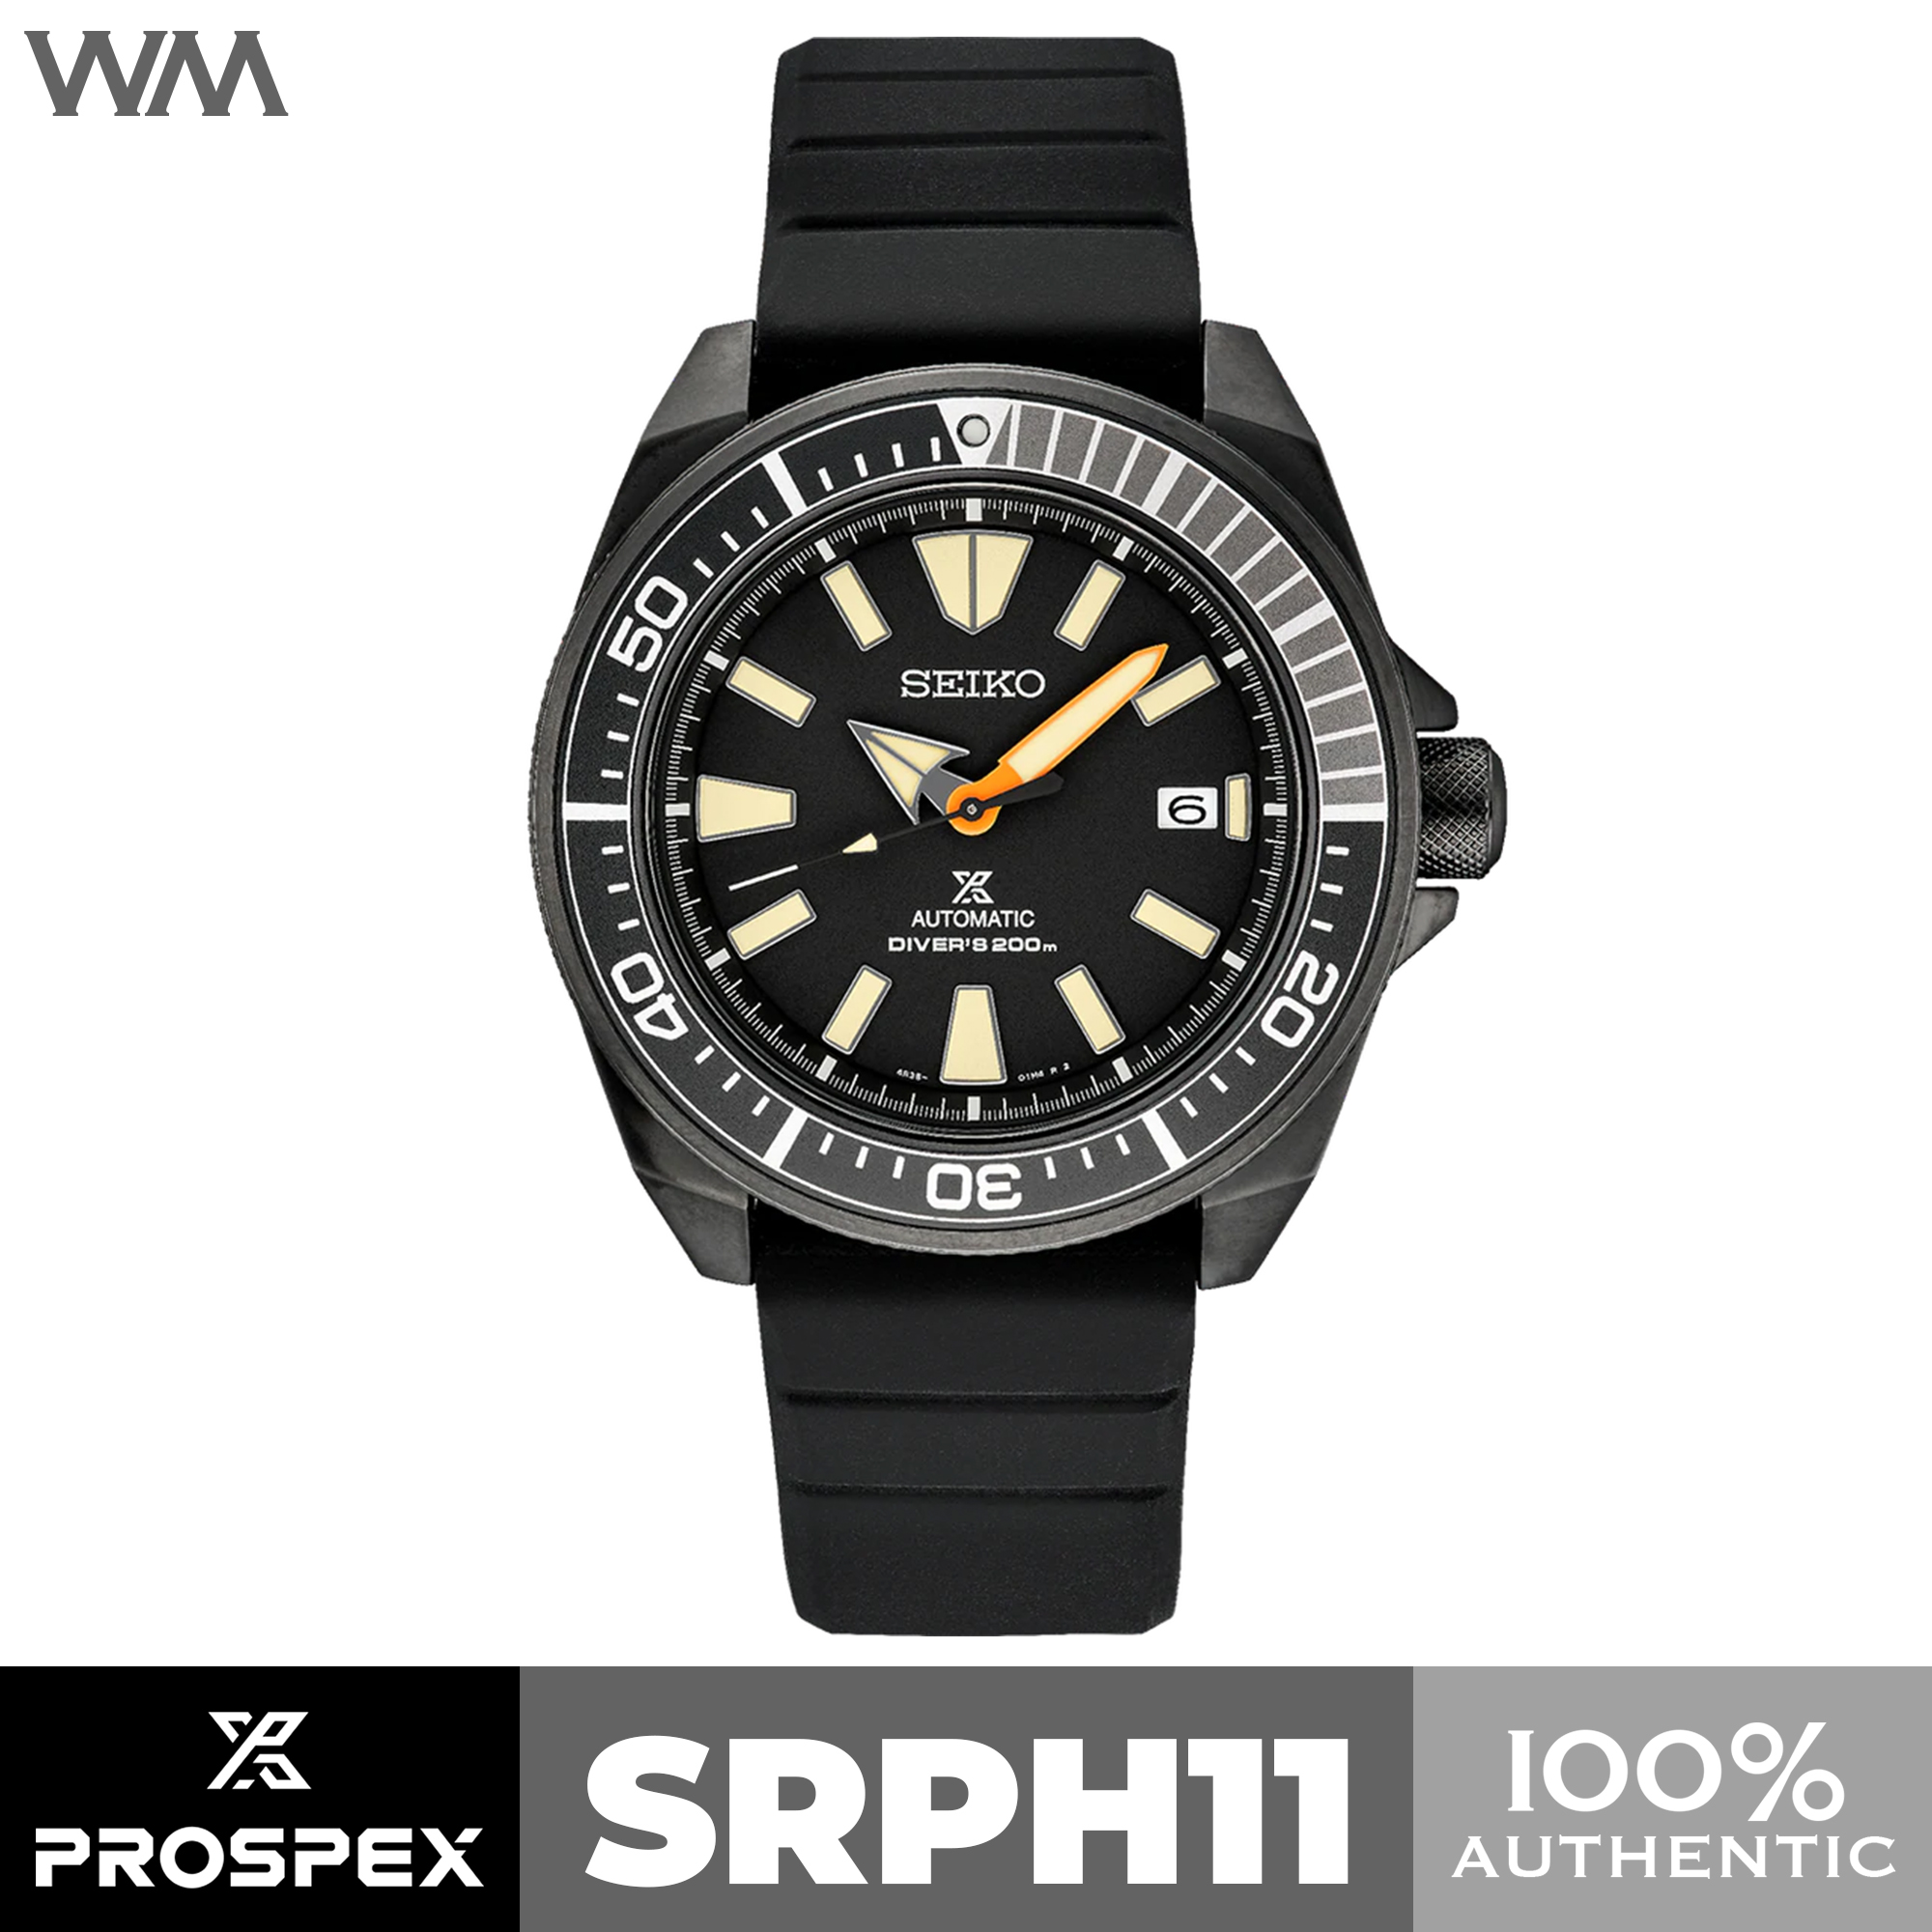 Seiko Prospex Limited Edition Ninja Samurai Black Series Automatic Watch  SRPH11 SRPH11K1 | Lazada PH